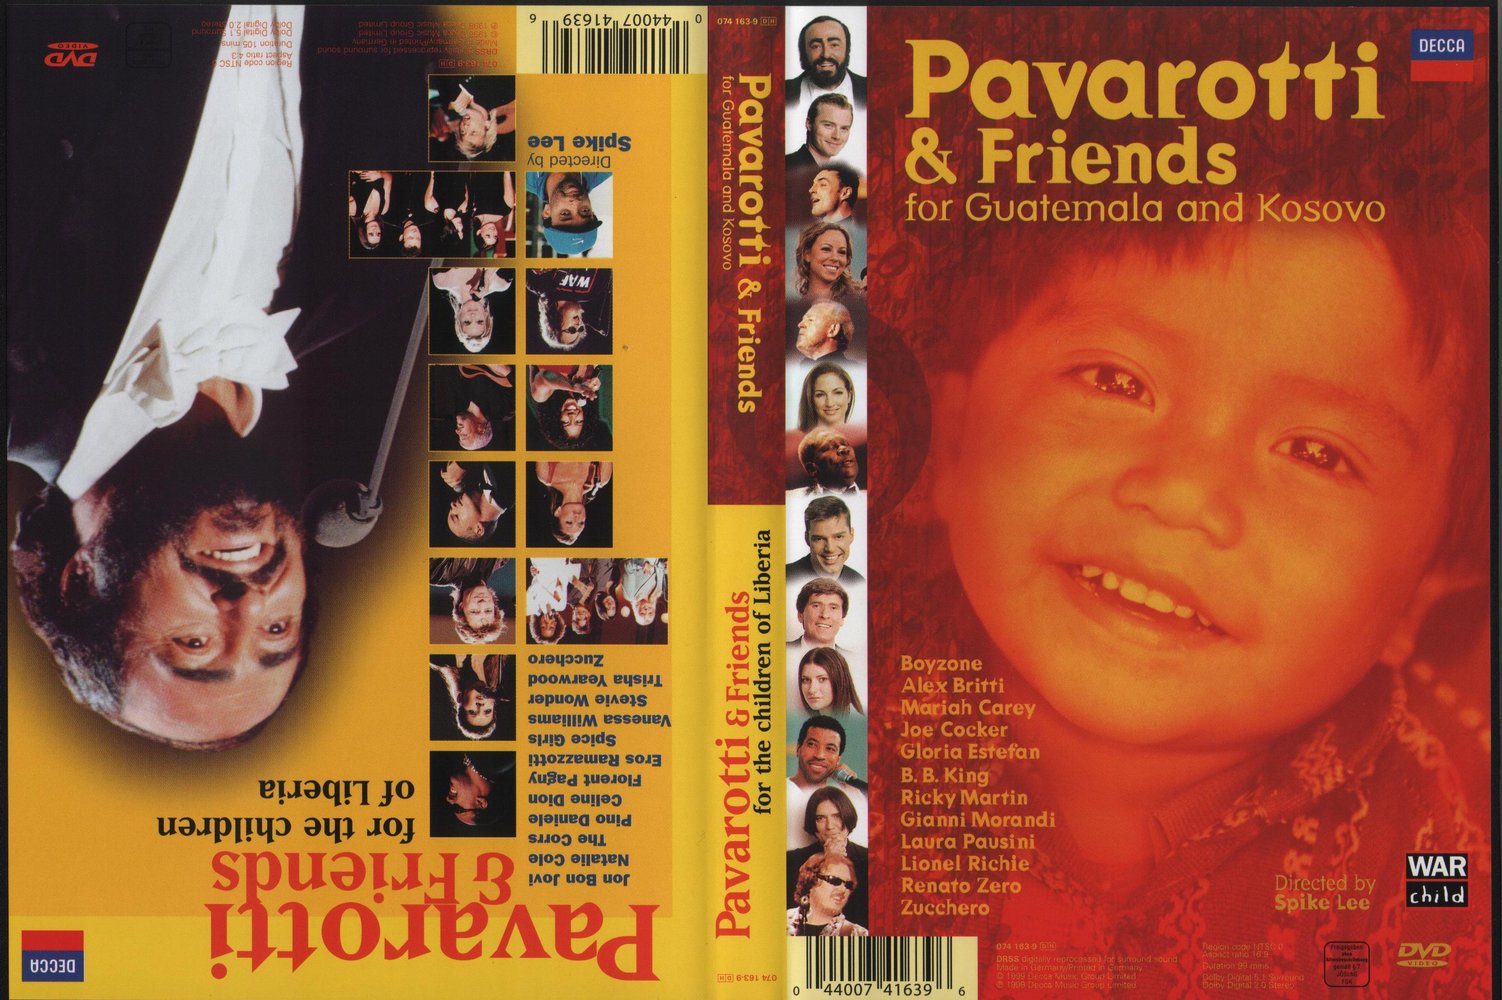 https://blogger.googleusercontent.com/img/b/R29vZ2xl/AVvXsEgrggchXxbZubB76yw4ZV2ZUorv4bDOYY3UYYwg6bh3ou5oxLWxTa93wRjHCvYWkFtzYJv4lt8MukWJZf4mdPOurgx9t6ZQqARtaxQ1b8yrQ7mcmf0JYxxOVJQFoxXYPbshT0aSX10afjQJ/s1600/Pavarotti+%26+Friends+-+For+Guatemala+%26+Kosovo+-+Cover.jpg